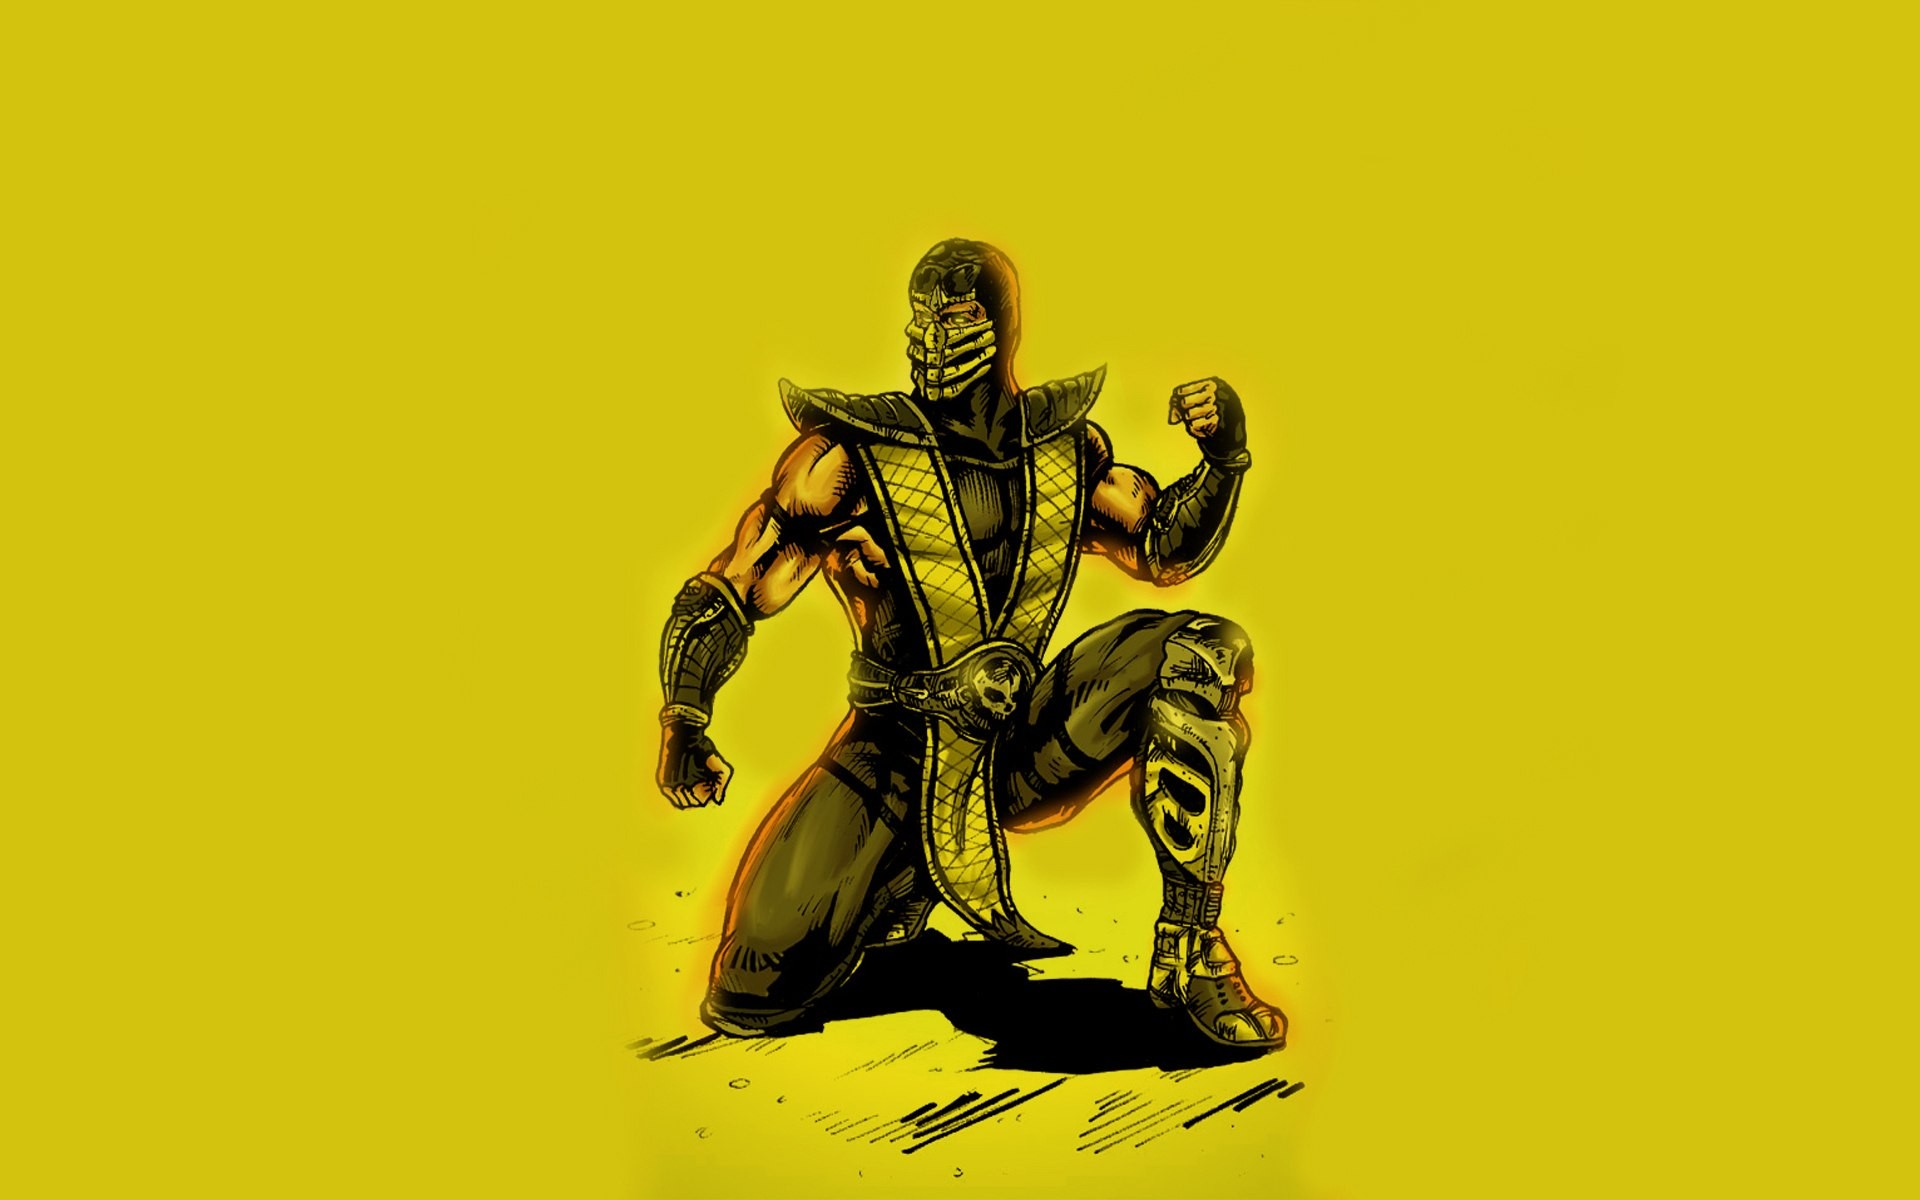 Télécharger des fonds d'écran Mortal Kombat HD